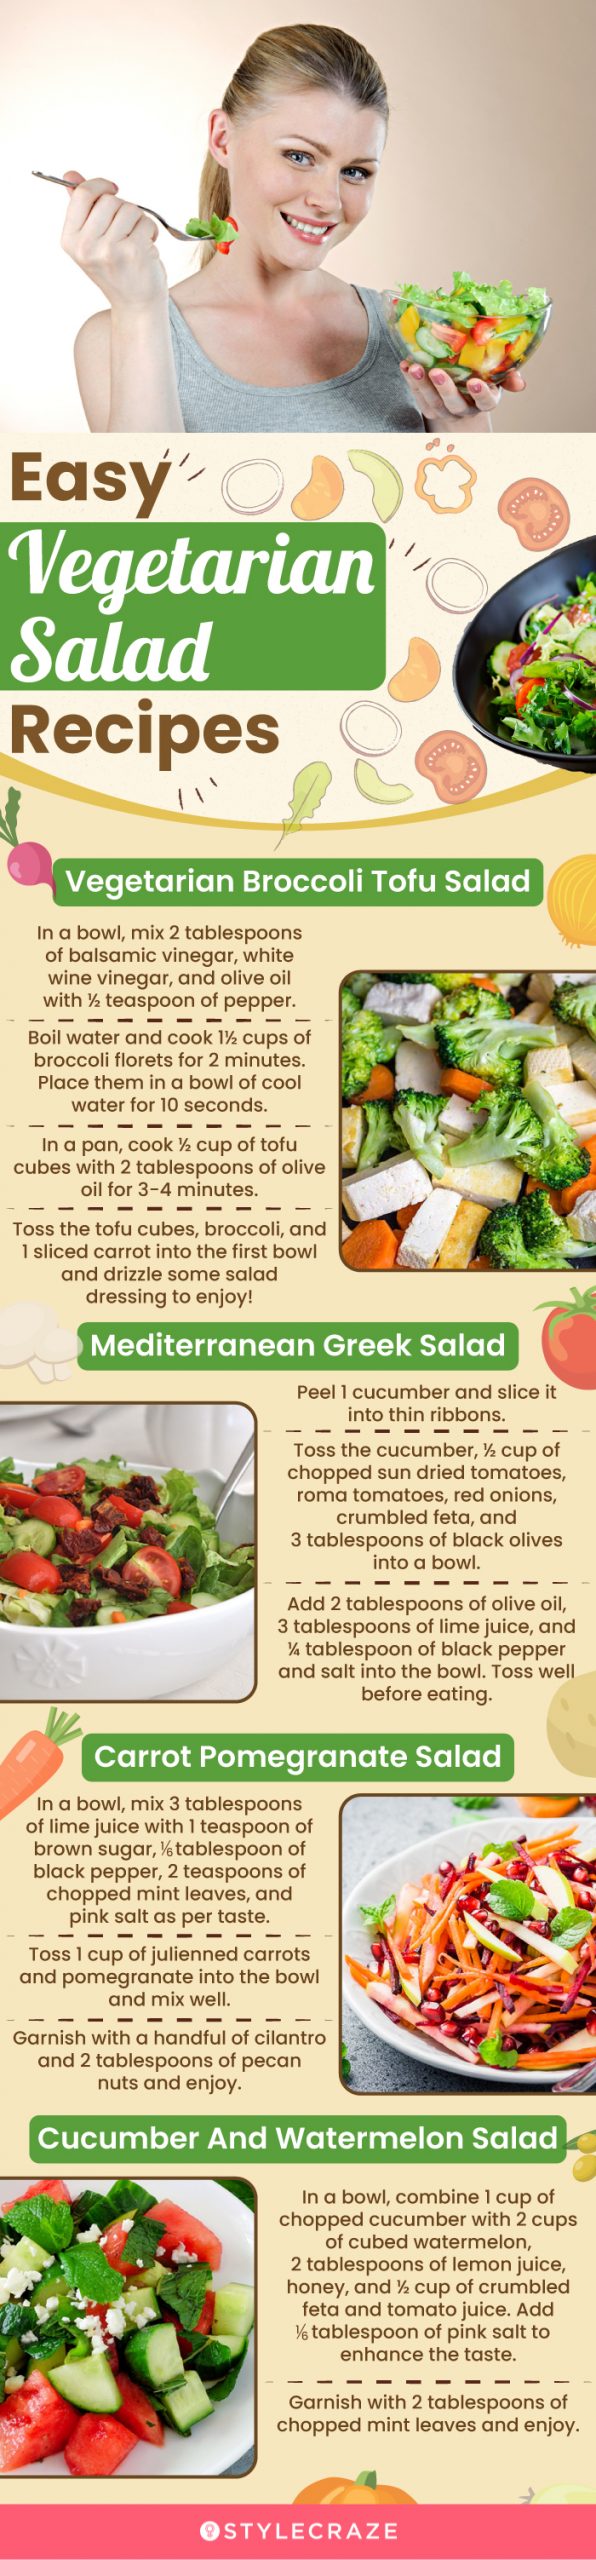 easy vegetarian salad recipes (infographic)